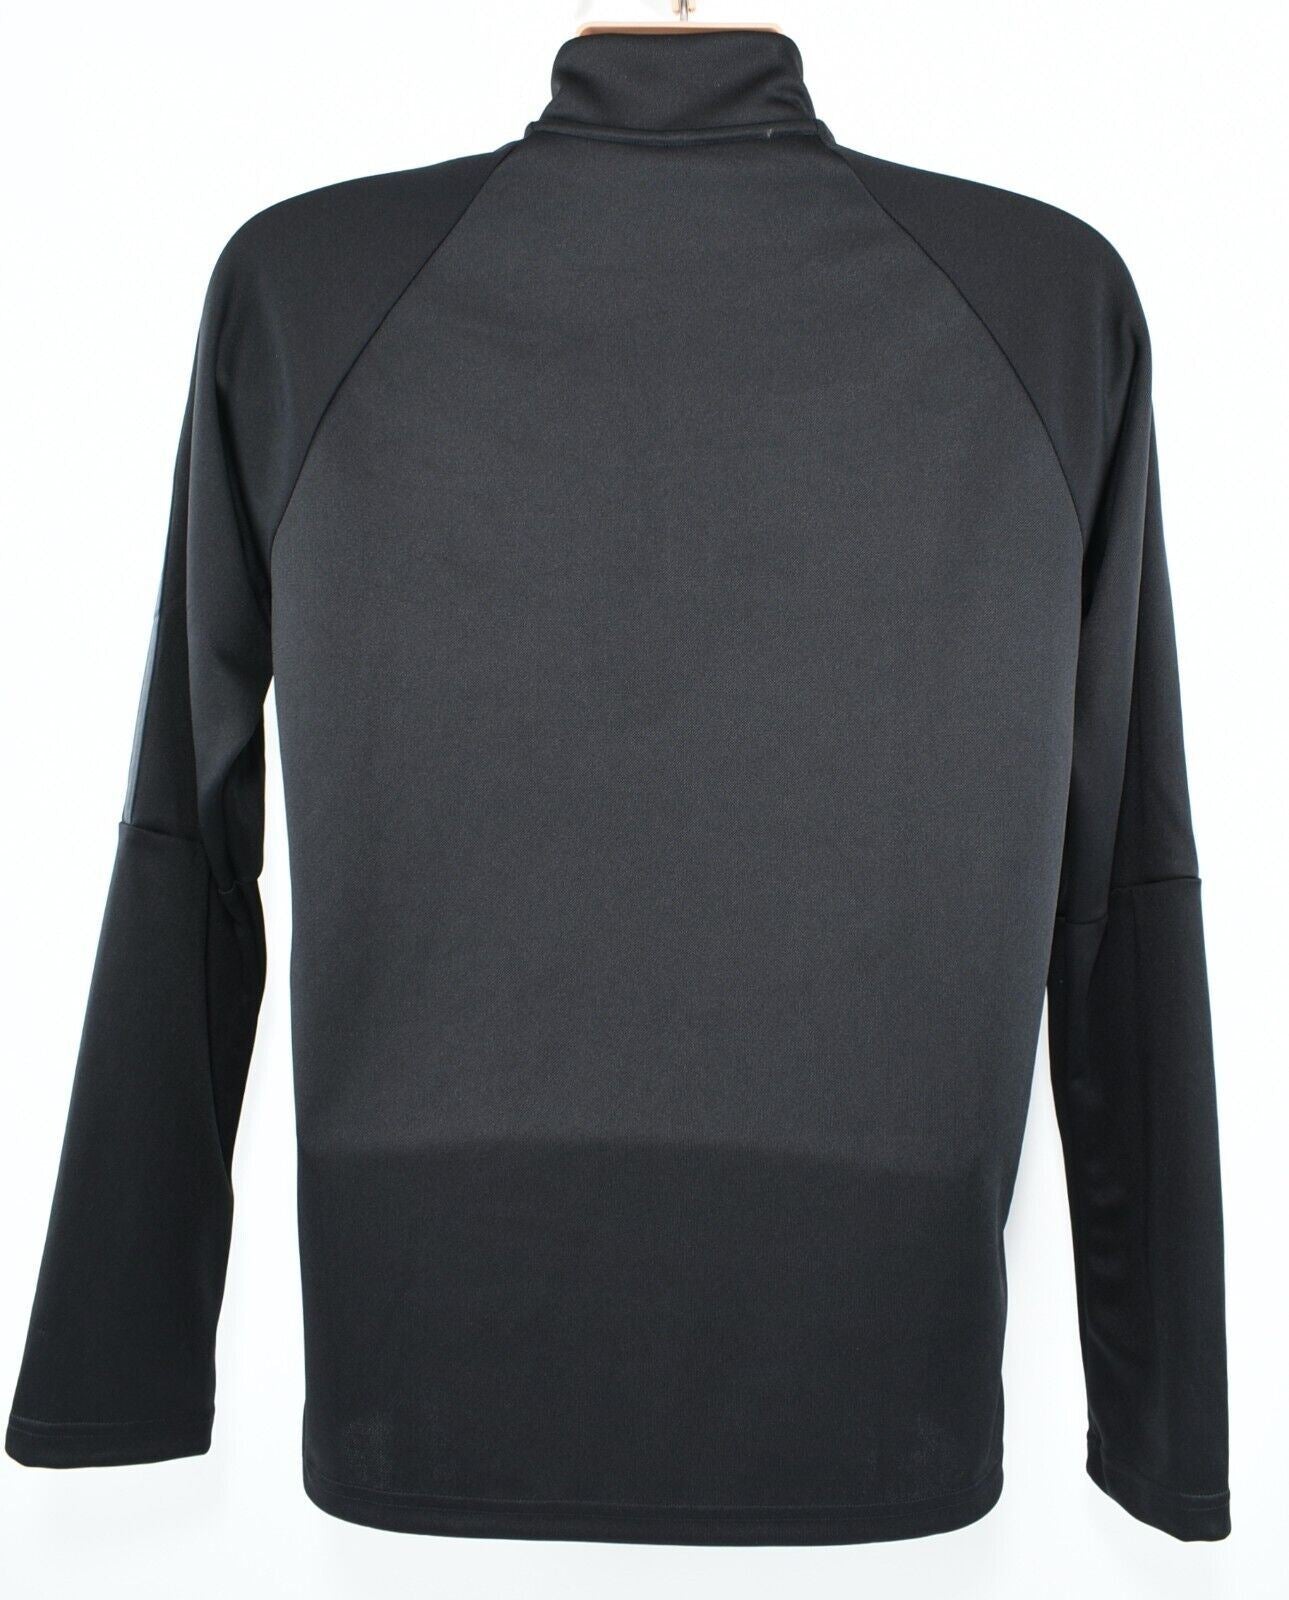 ADIDAS Men's SERENO 19 1/4 Zip Neck Long Sleeve Training Top, Black/Grey, size S